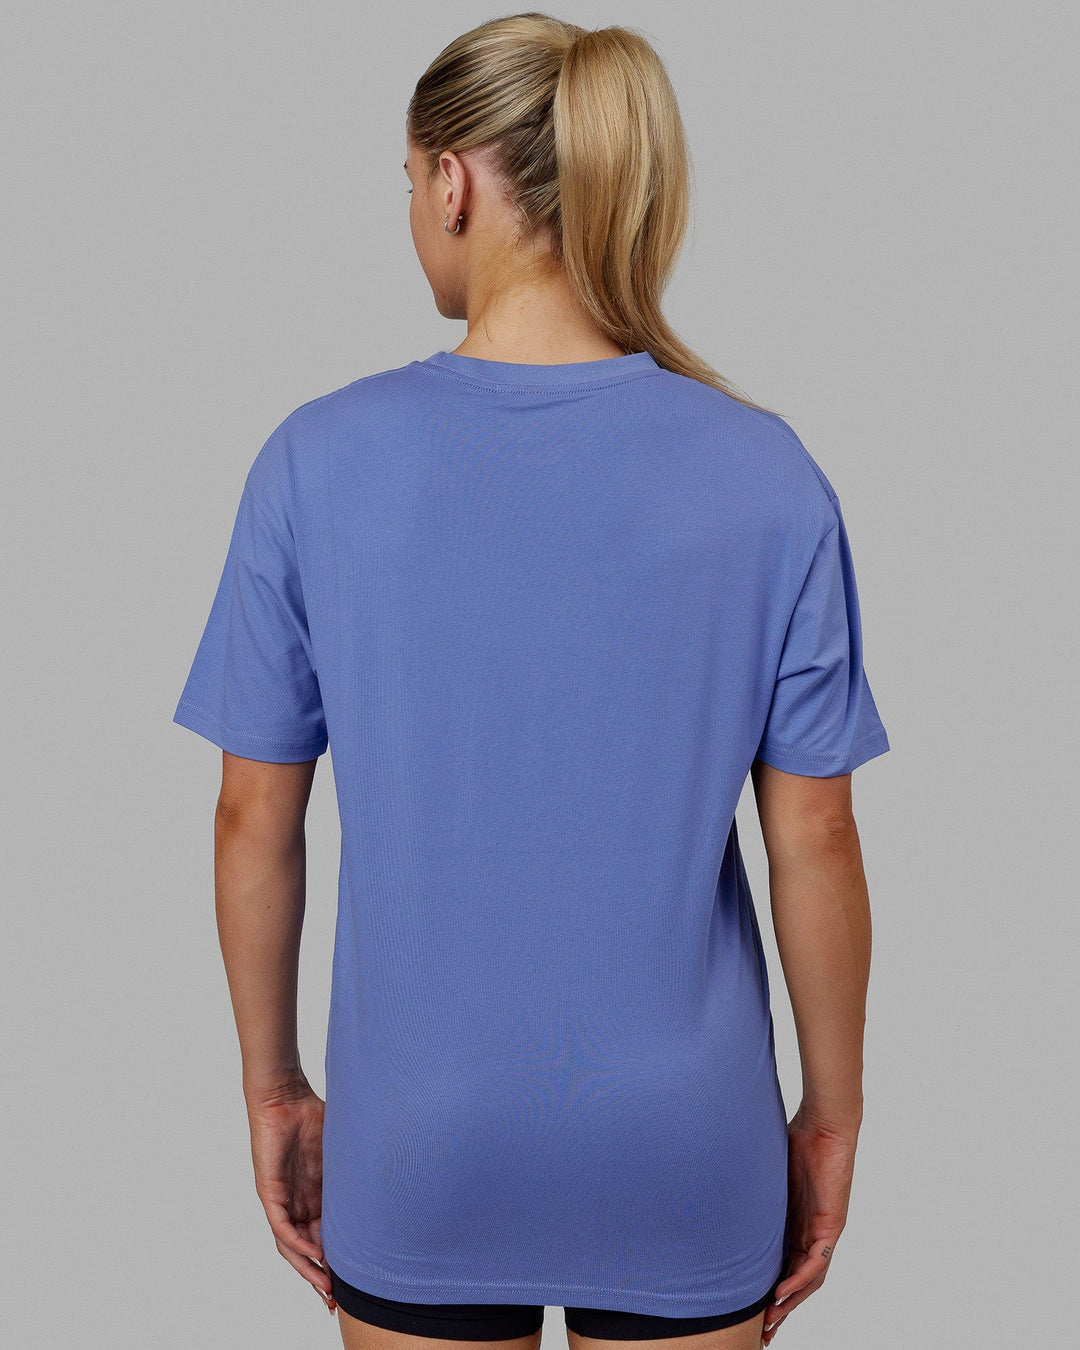 Woman wearing Unisex 1% Better FLXCotton Tee Oversize - Cornflower Blue